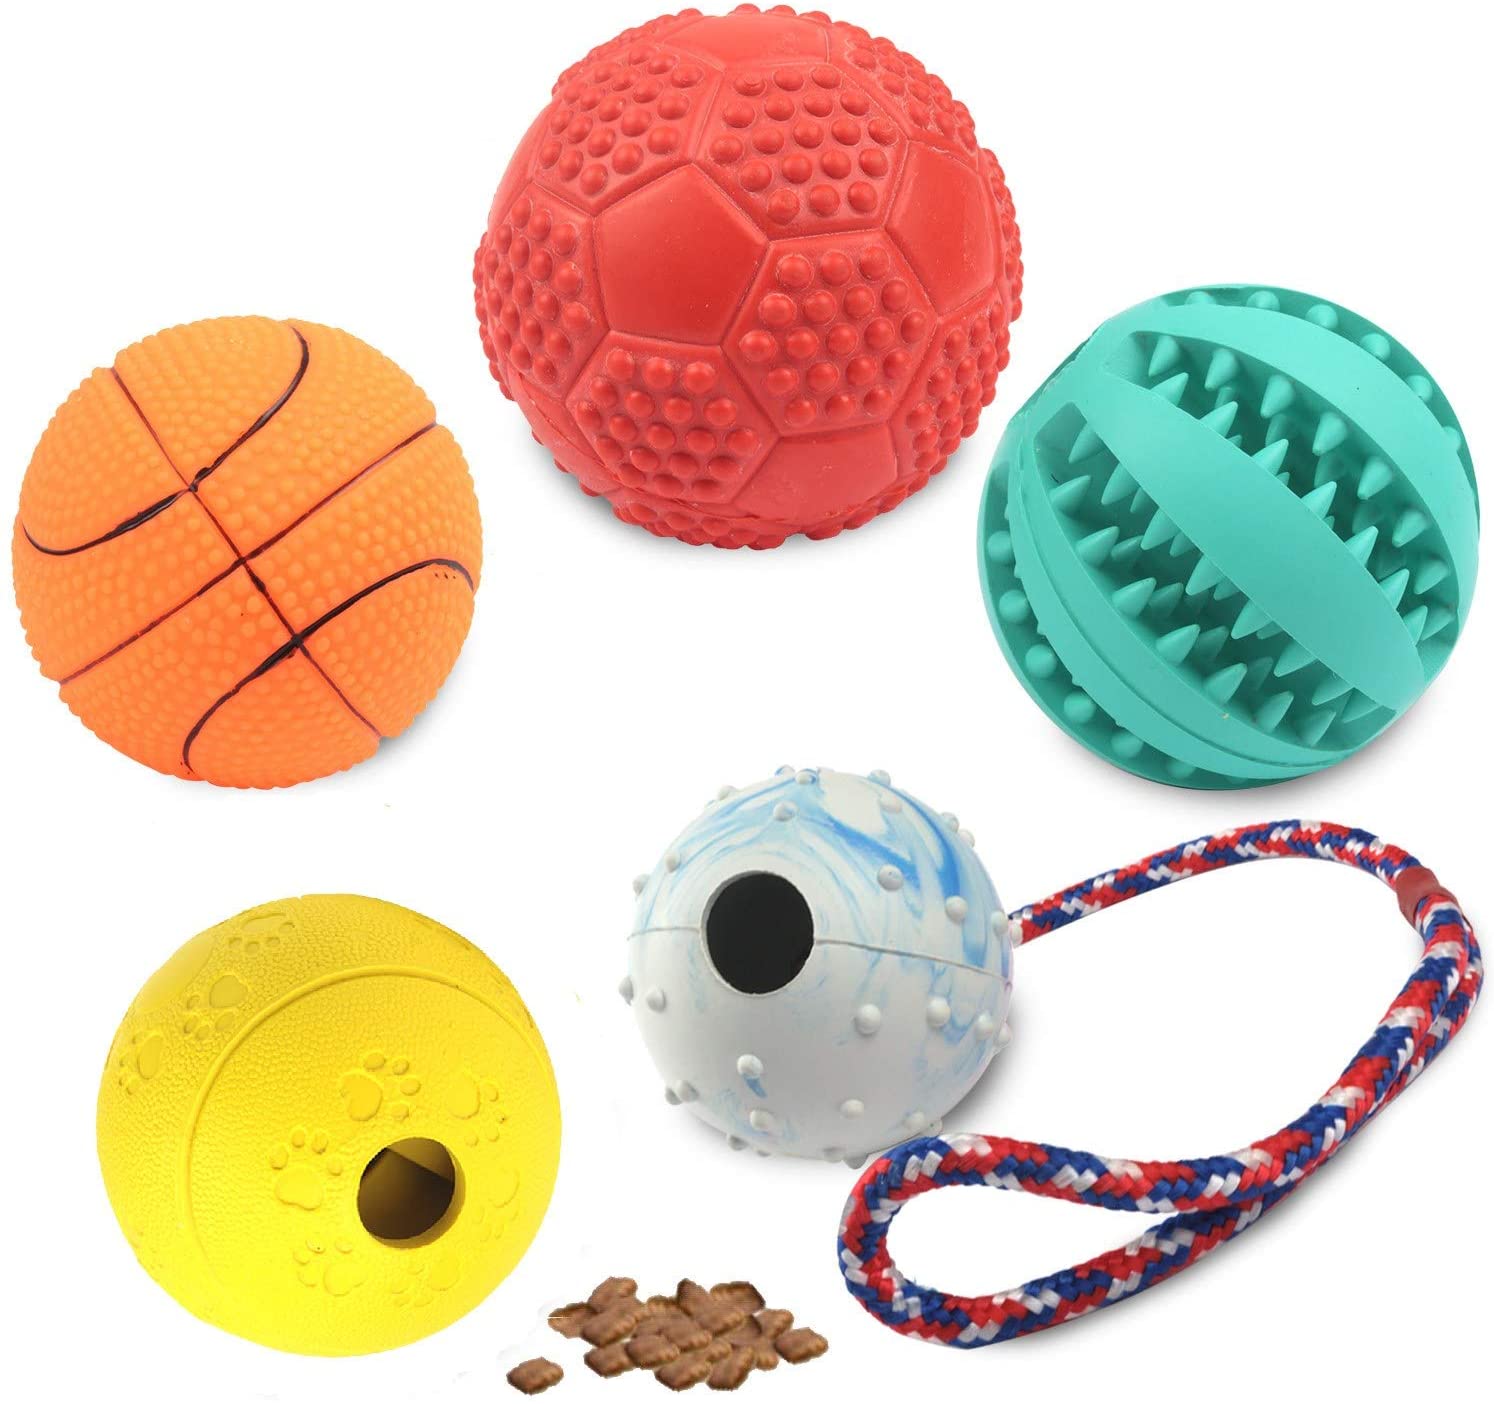 Hundeball ️ Spielball ️ Wurfball ️ Ballspiele mit dem Hund